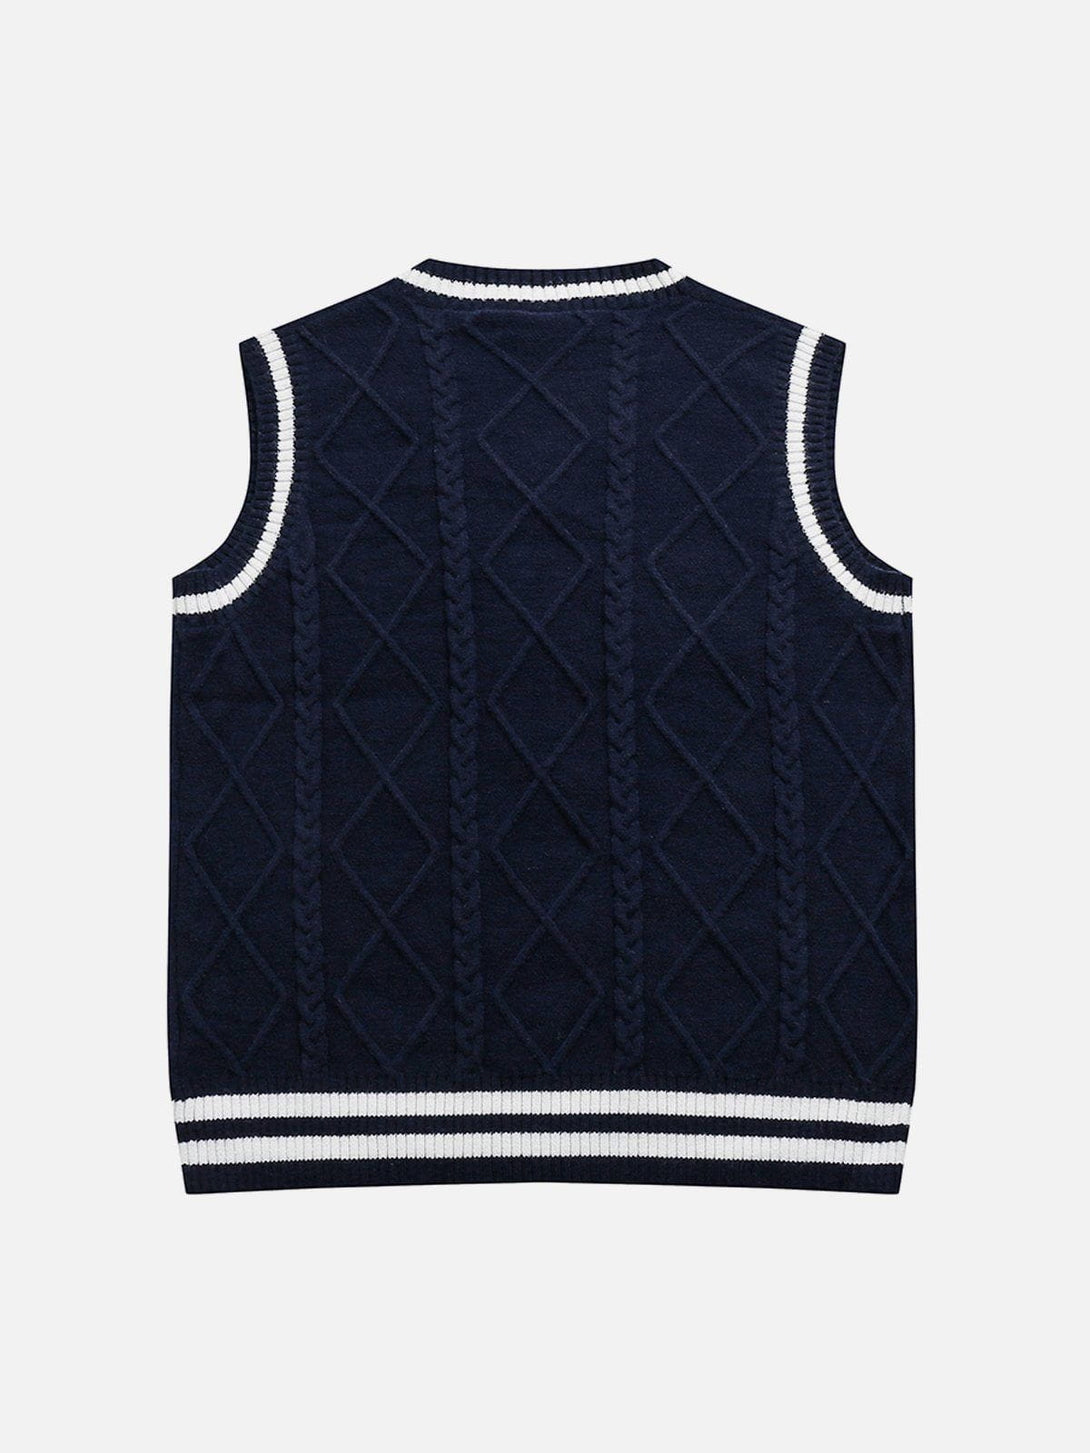 Levefly - V-neck Braided Pattern Sweater Vest - Streetwear Fashion - levefly.com